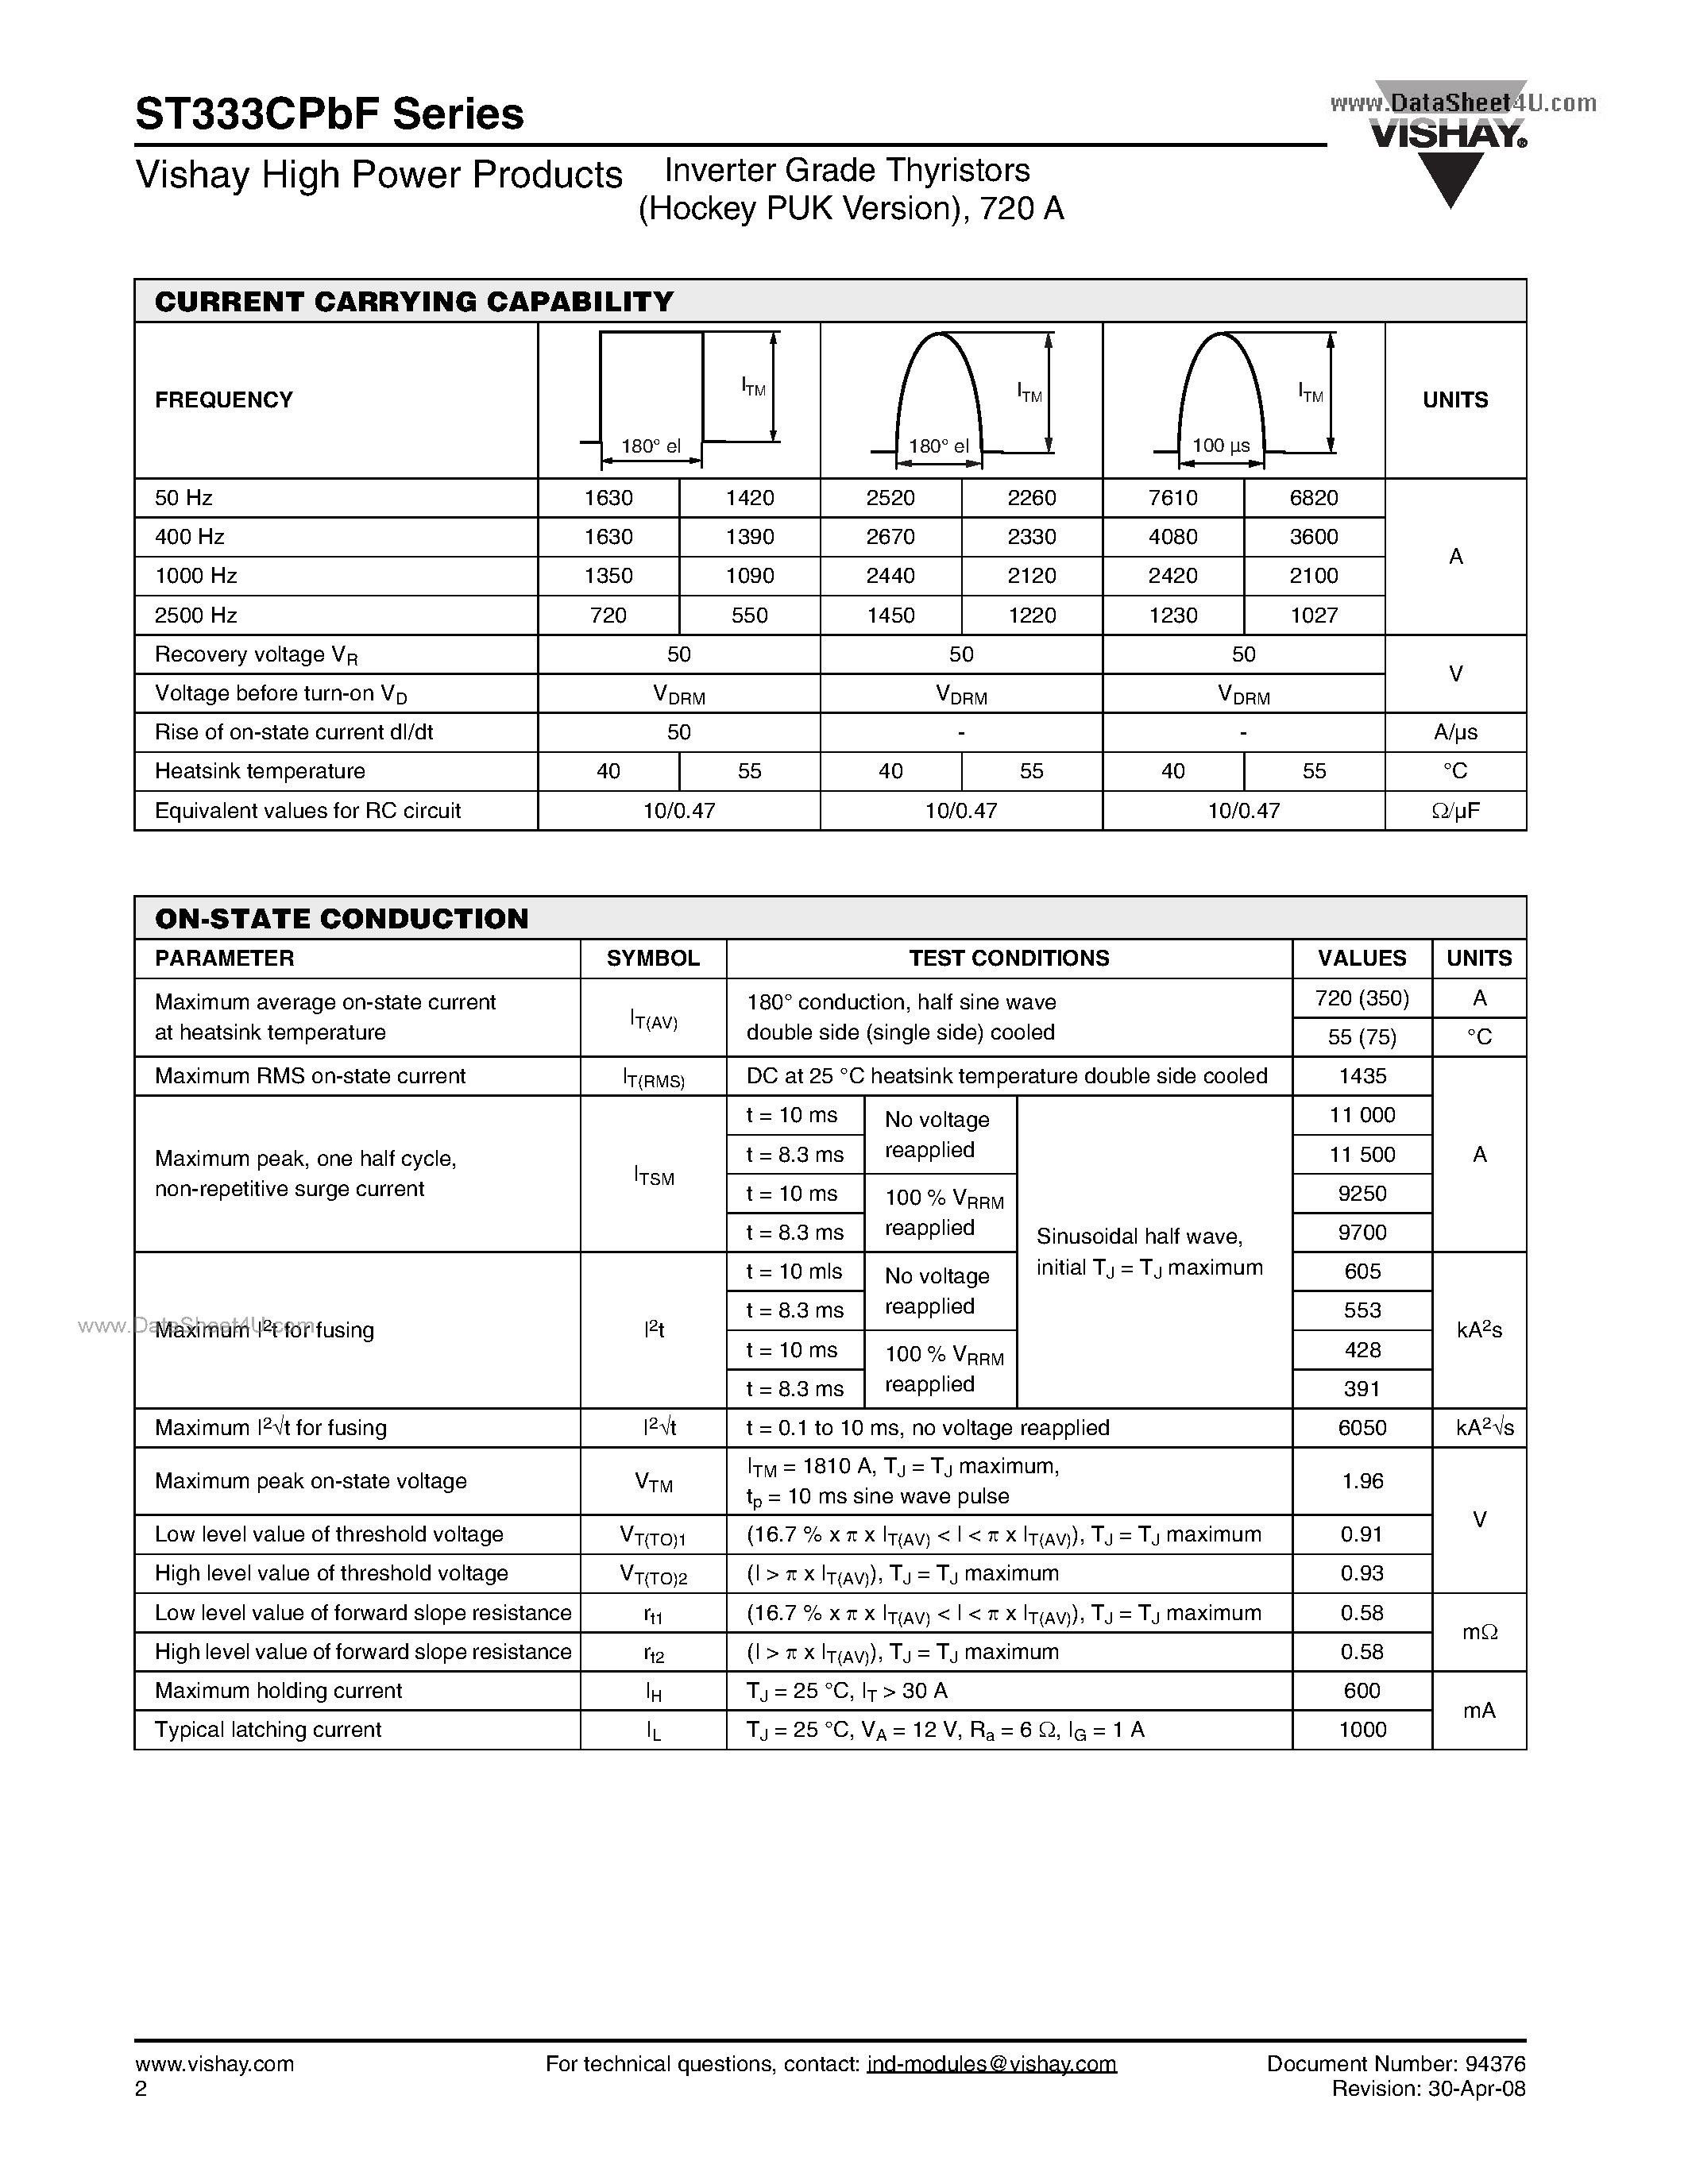 Datasheet ST333CPBF - Inverter Grade Thyristors page 2